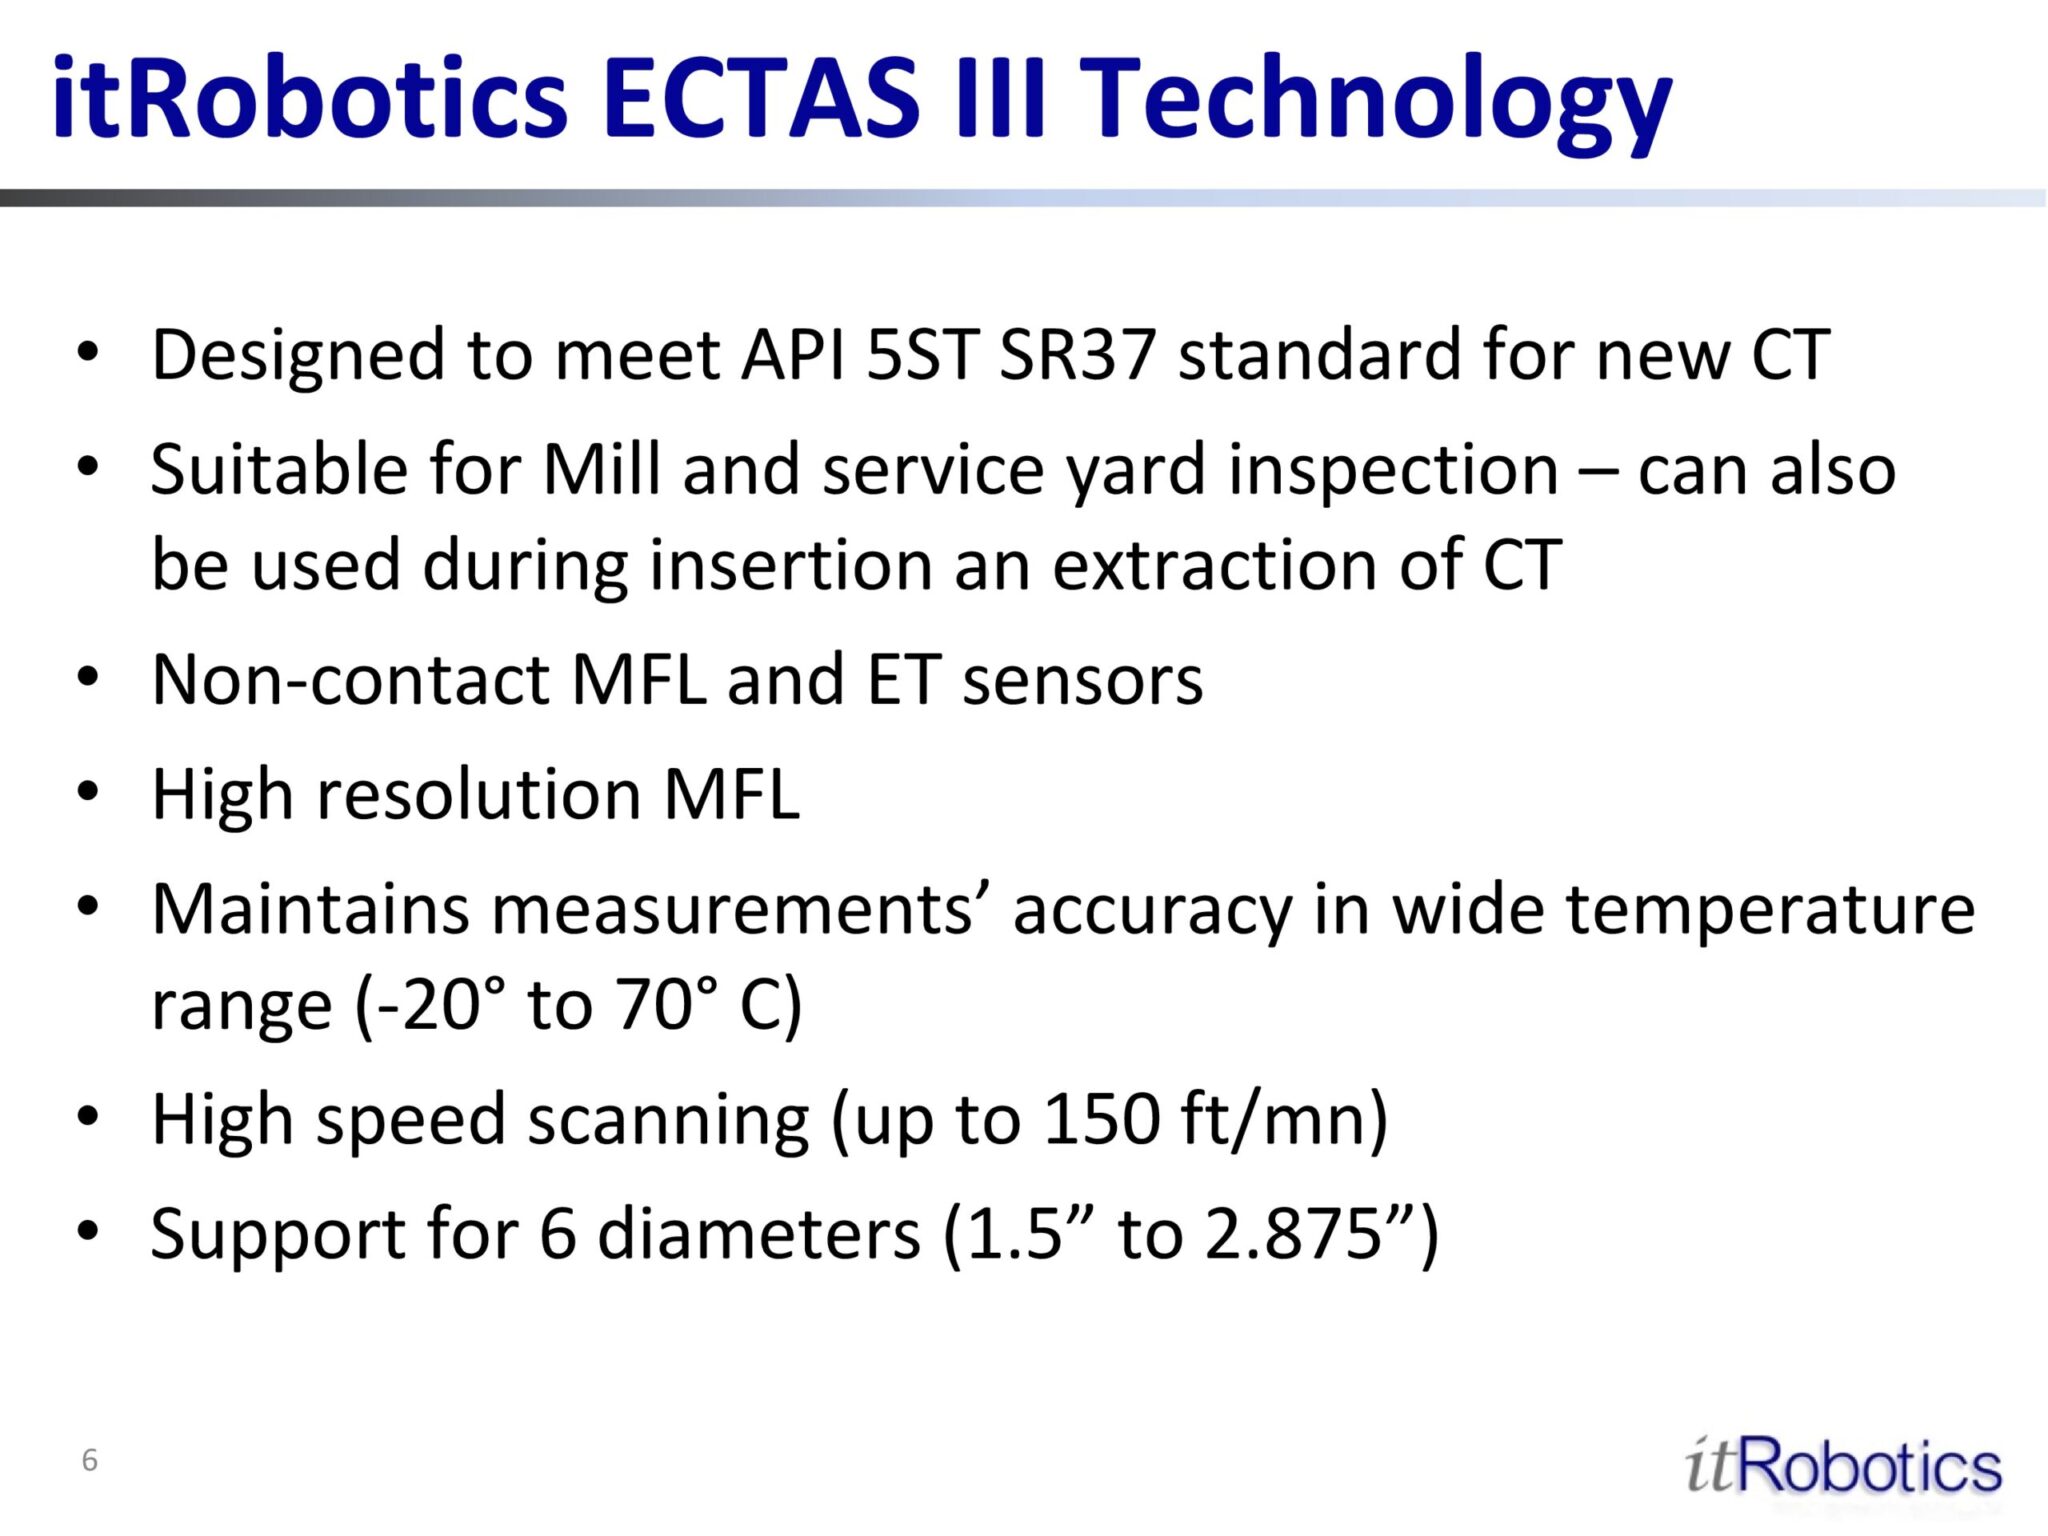 itRobotics ECTAS III Technology 2